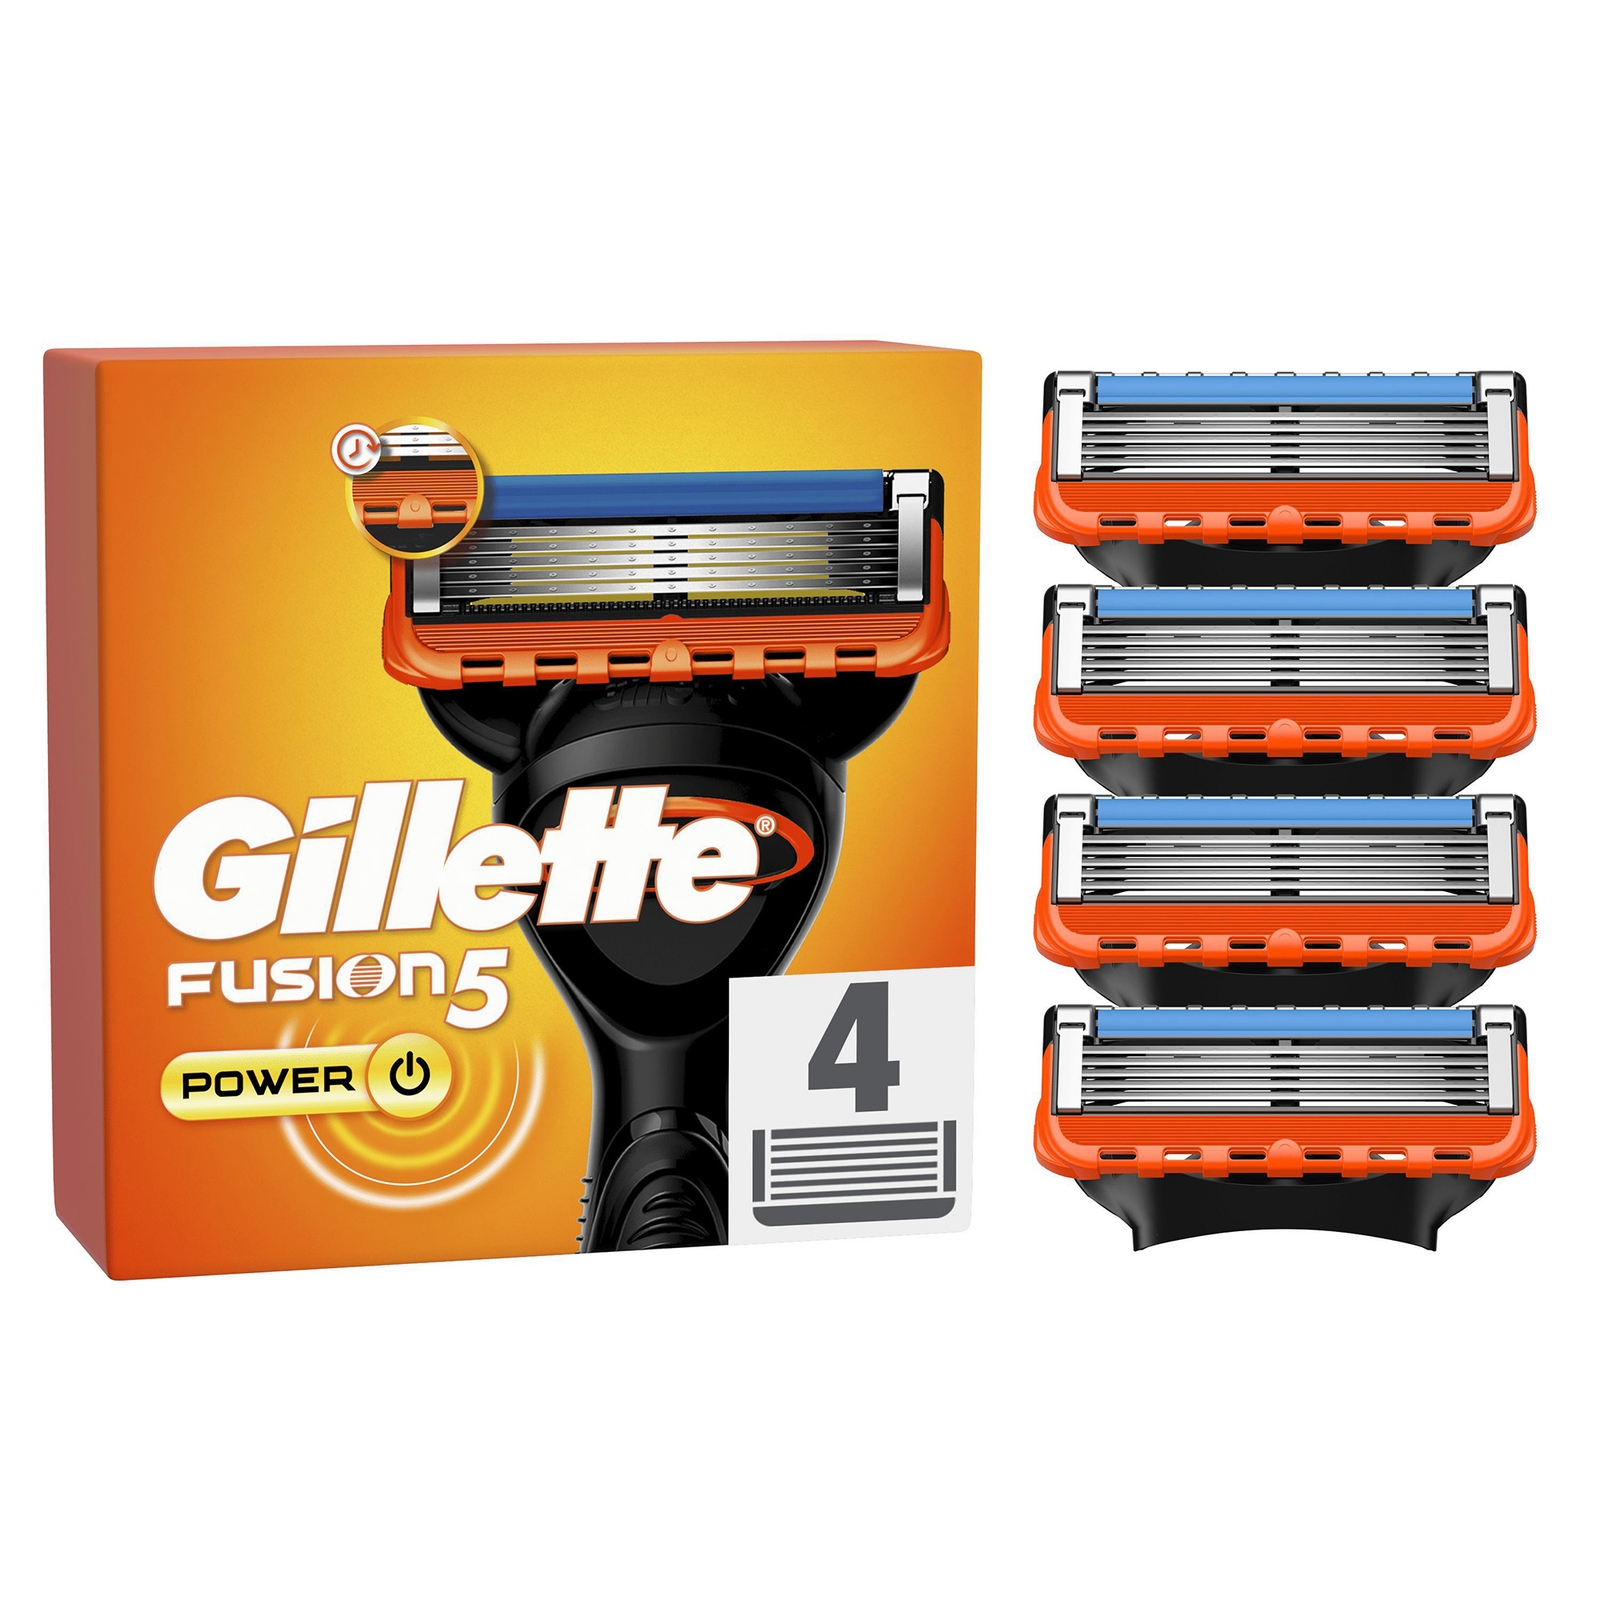 Gillette Fusion5 Power Razor Blades - 4 Pack